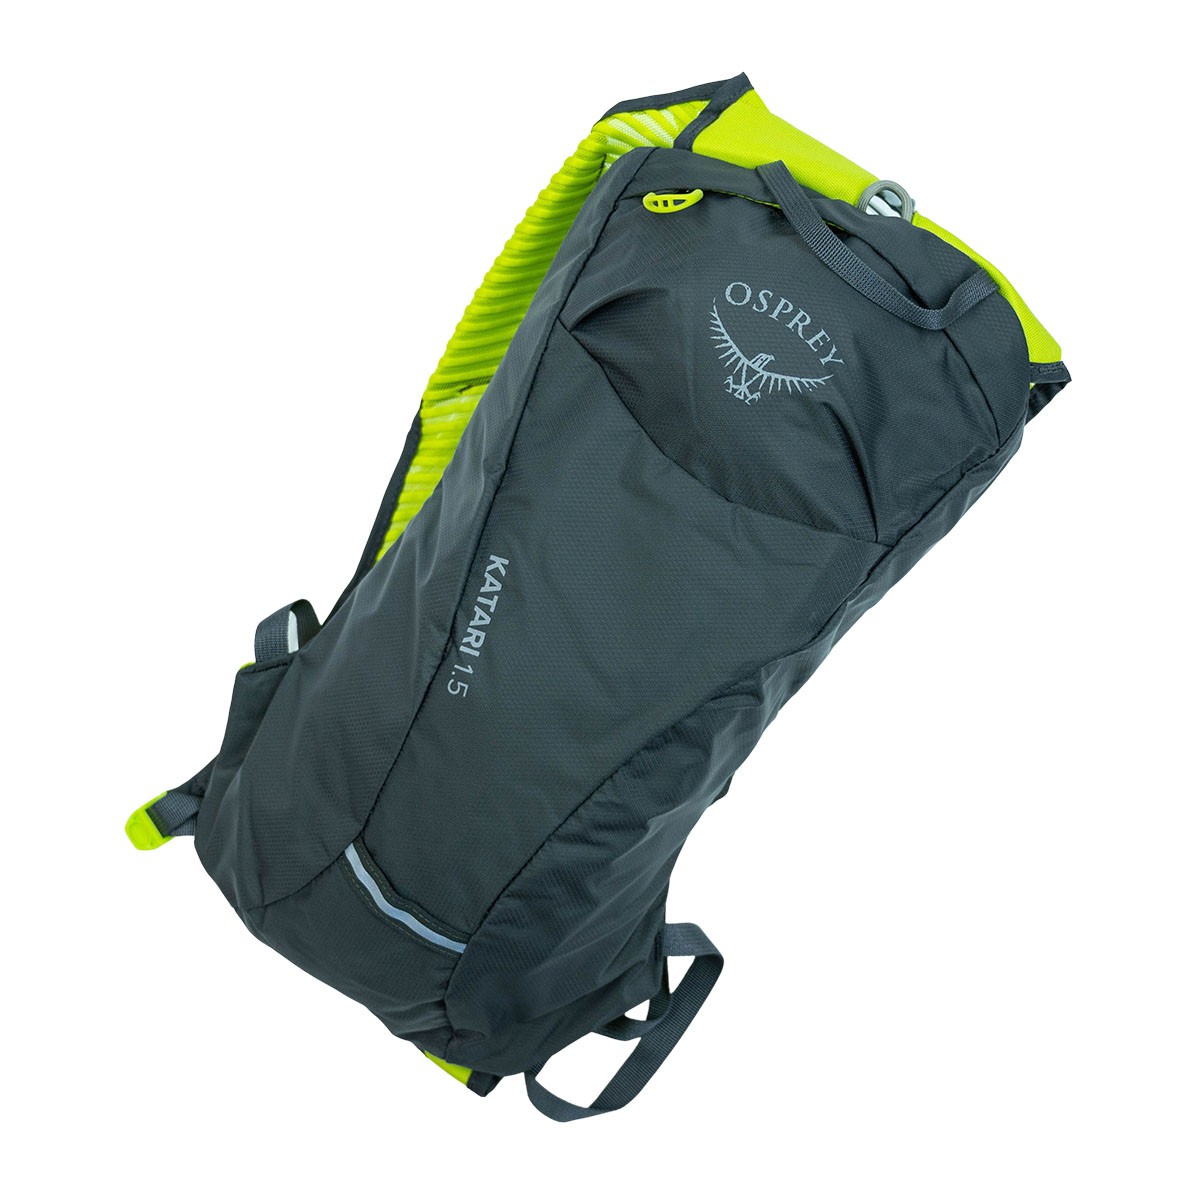 Osprey Katari 1.5 Mountain Biking Backpack - 爬山單車 附1.5L水袋 <旺角店>